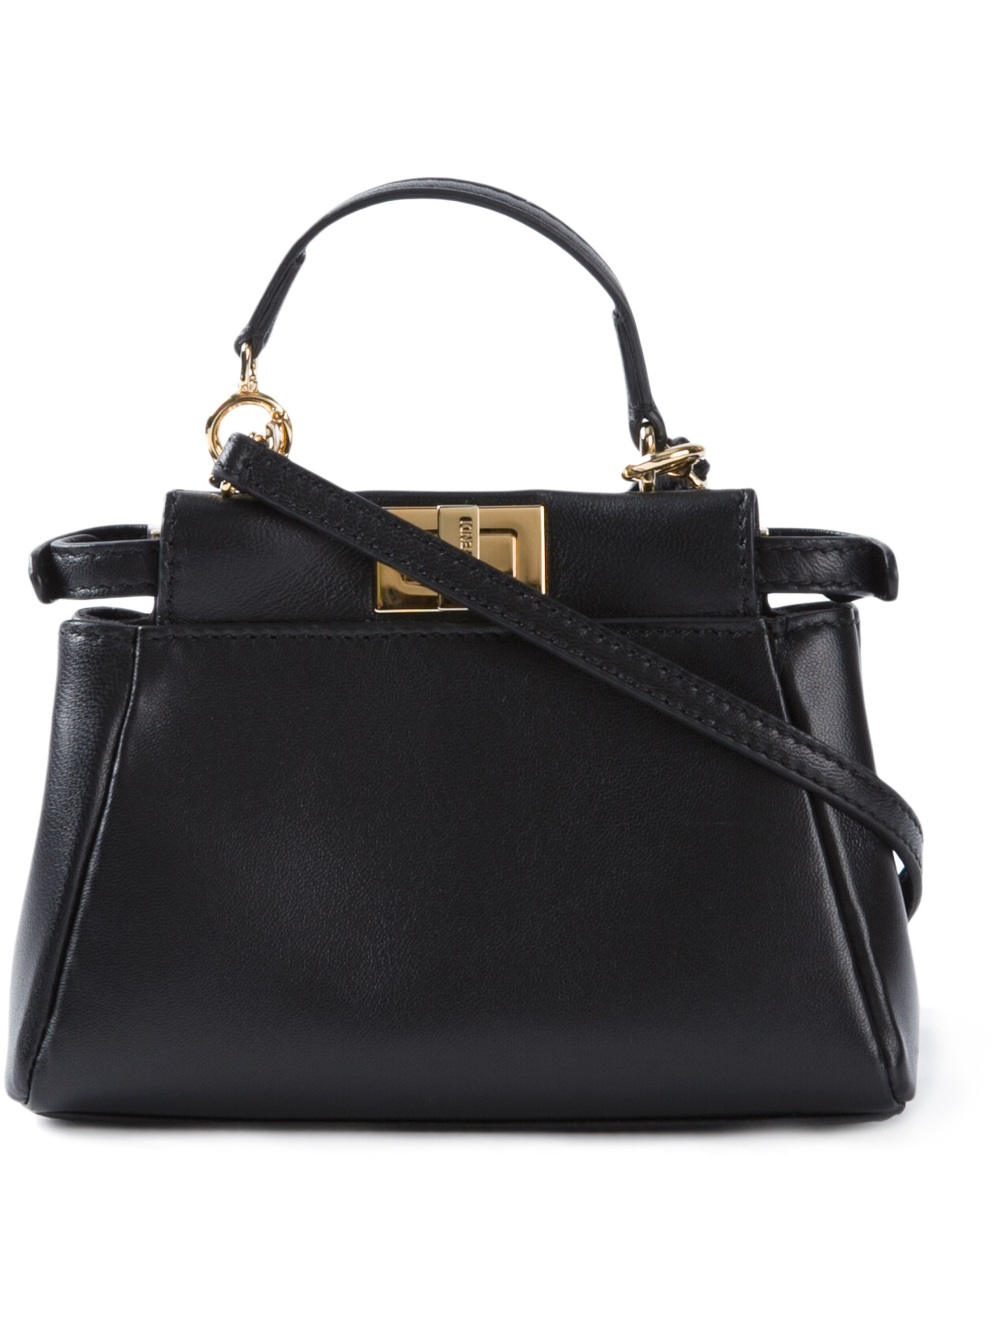 Fendi Micro Peekaboo Leather Bag in Black - Lyst